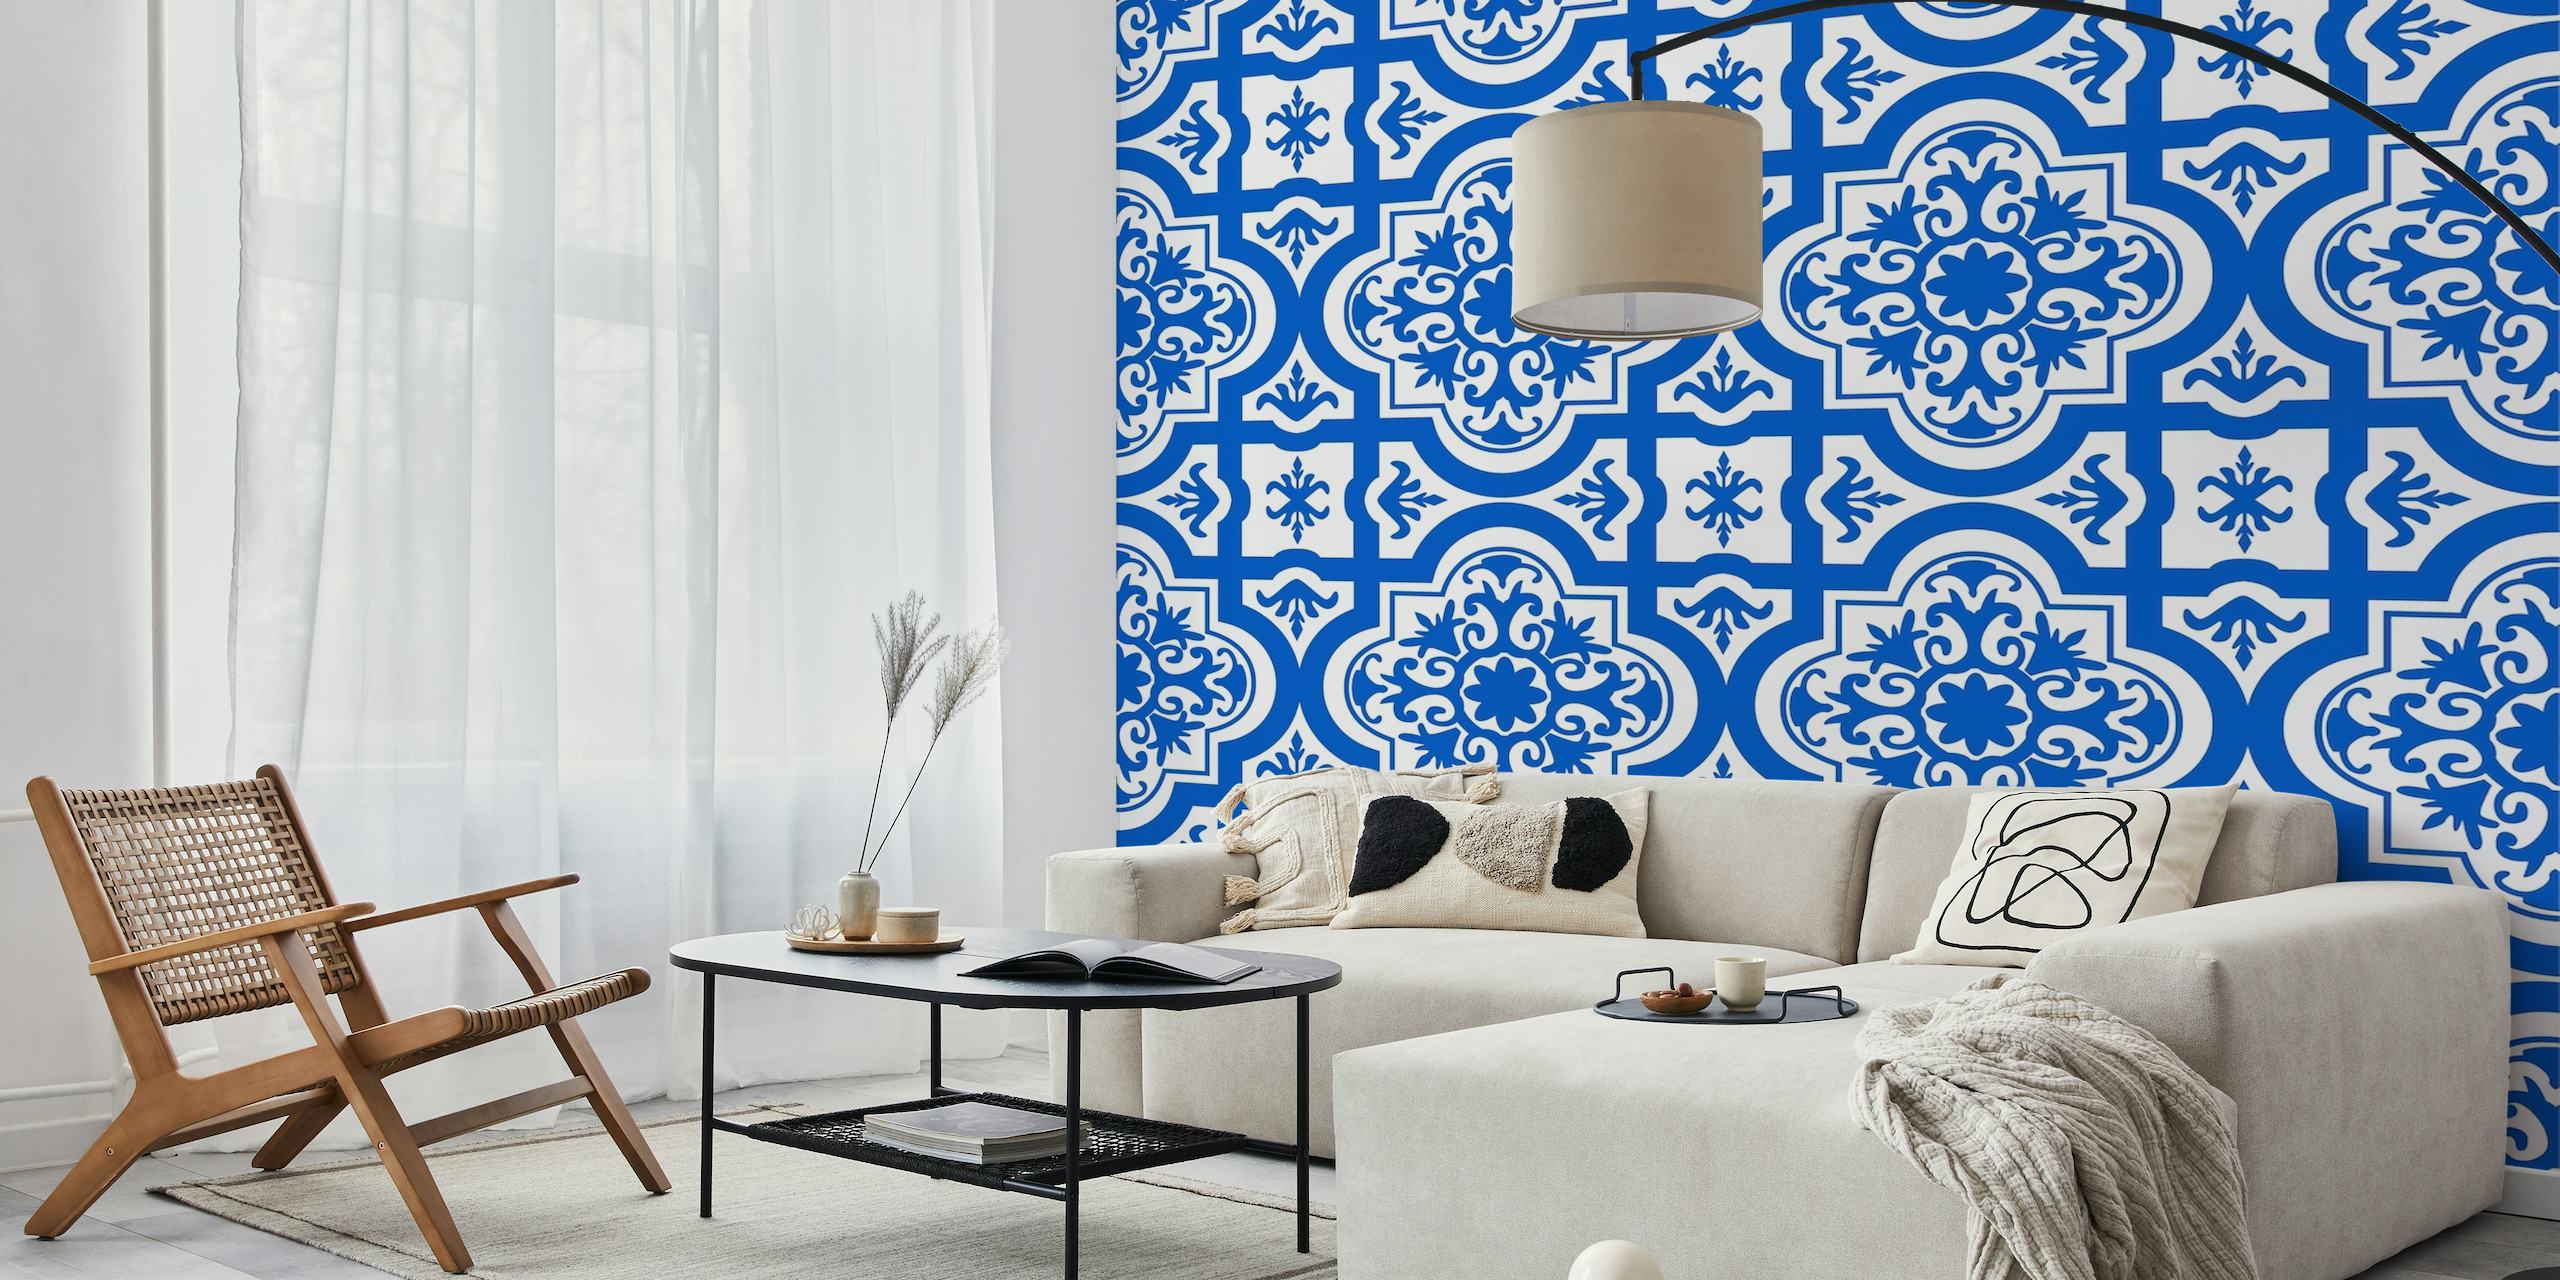 Spanish tile pattern azure blue white carta da parati